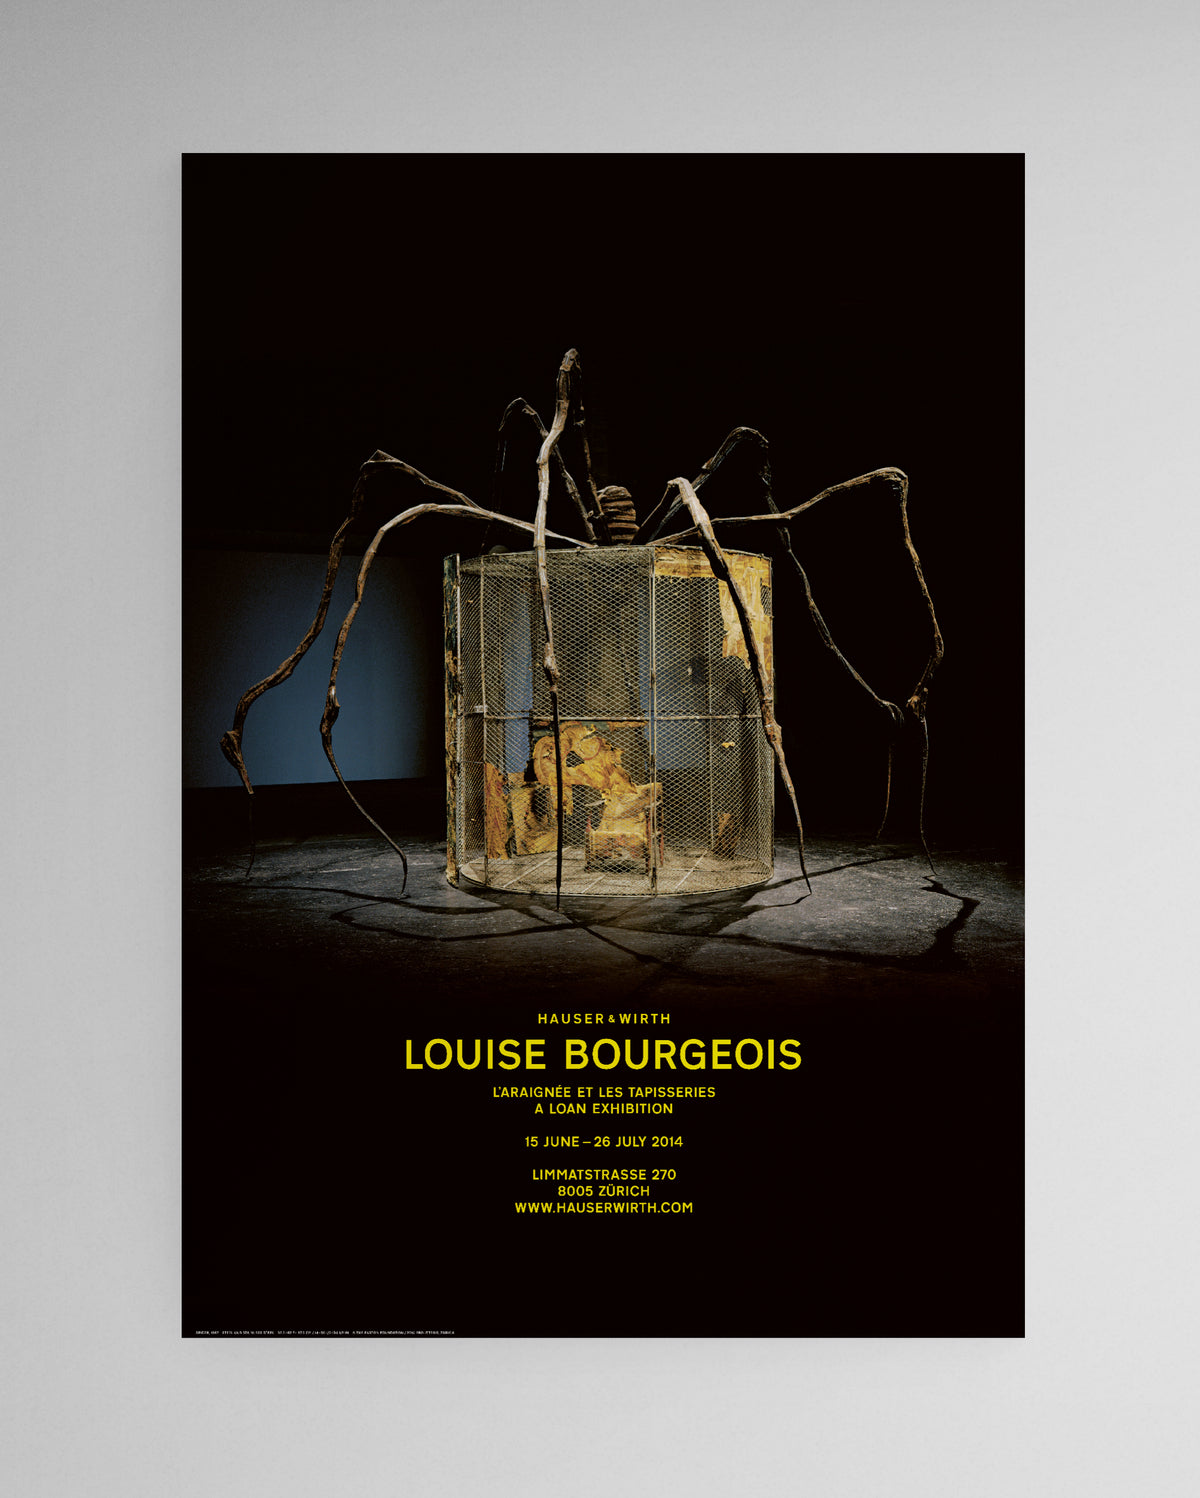 Louise Bourgeois's Paris Review